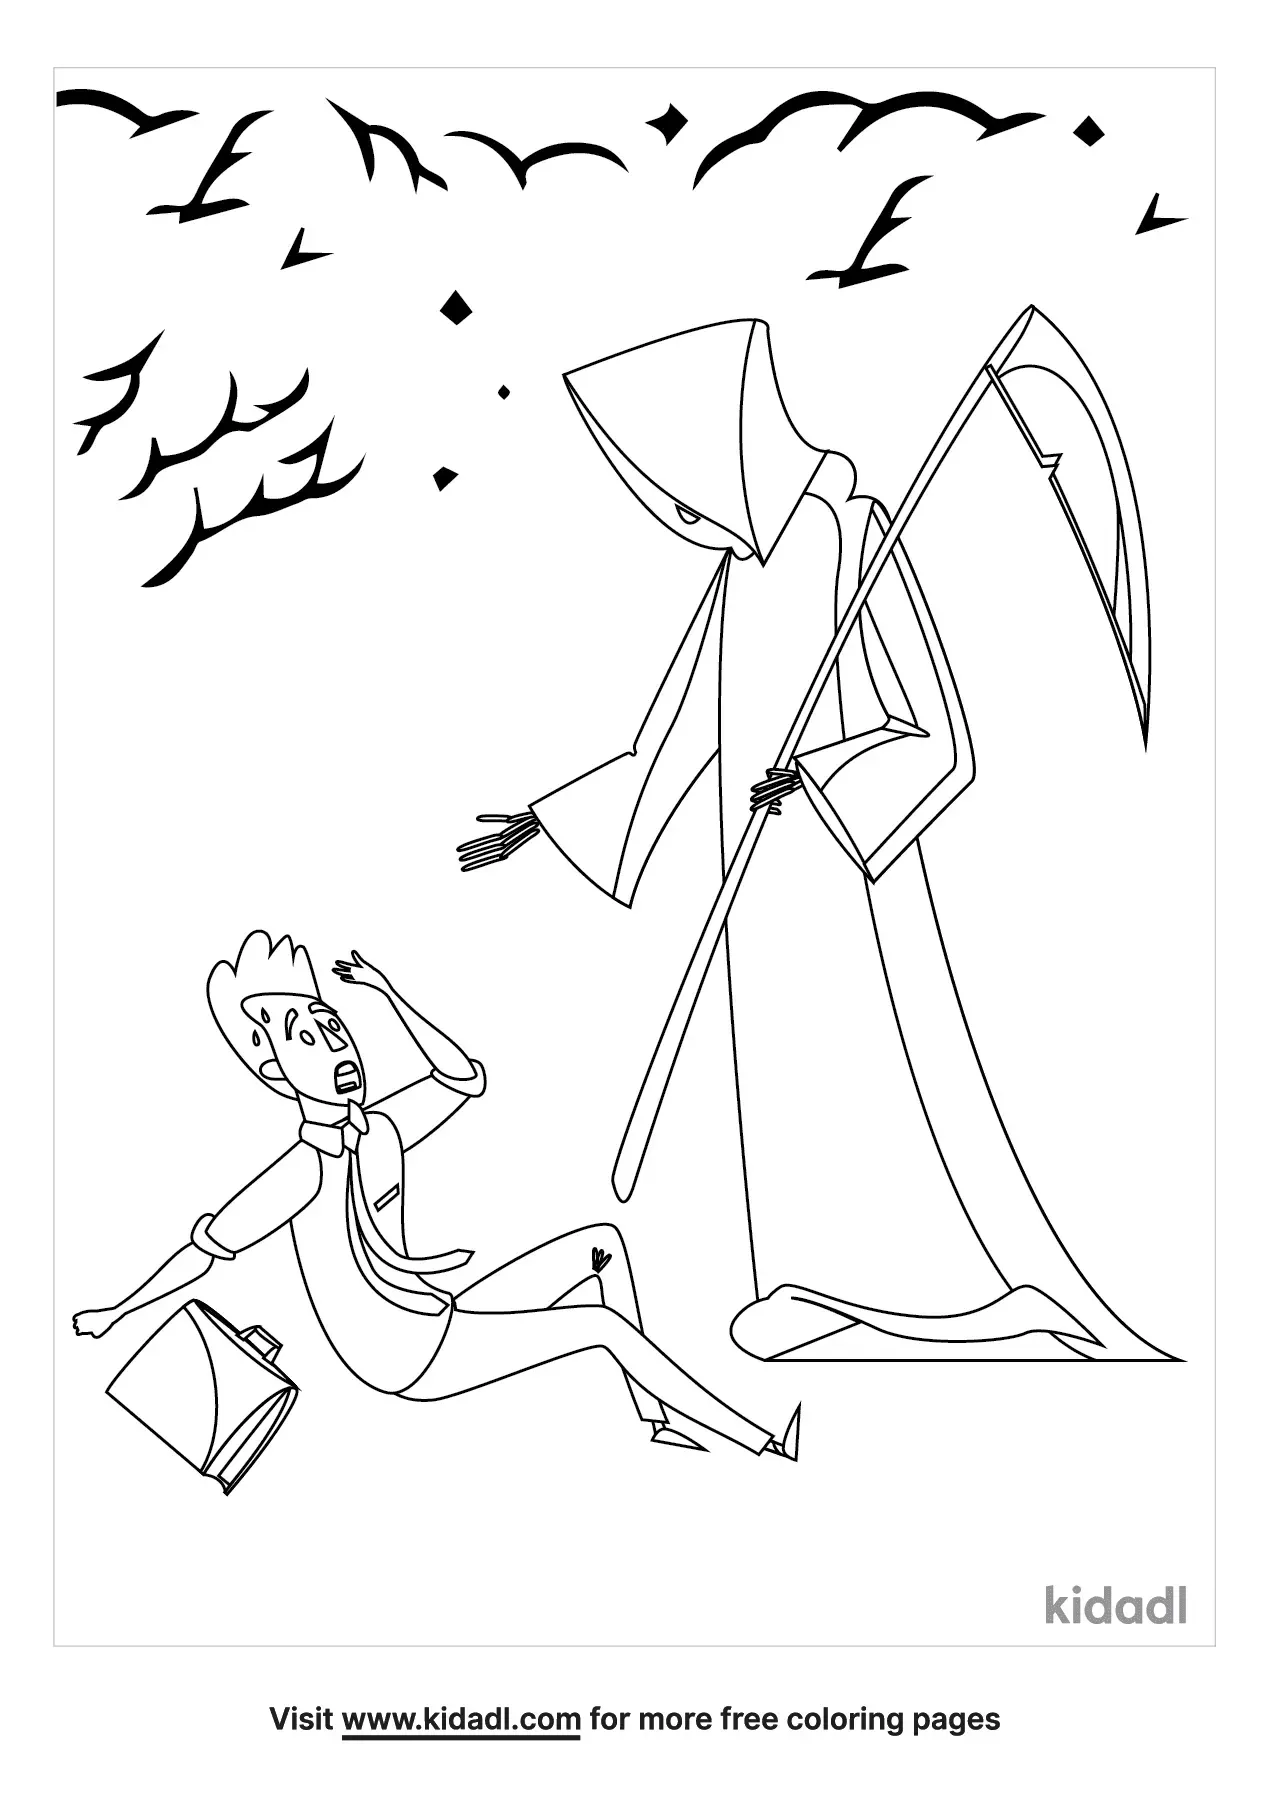 Free Grim Reaper Coloring Page | Coloring Page Printables | Kidadl